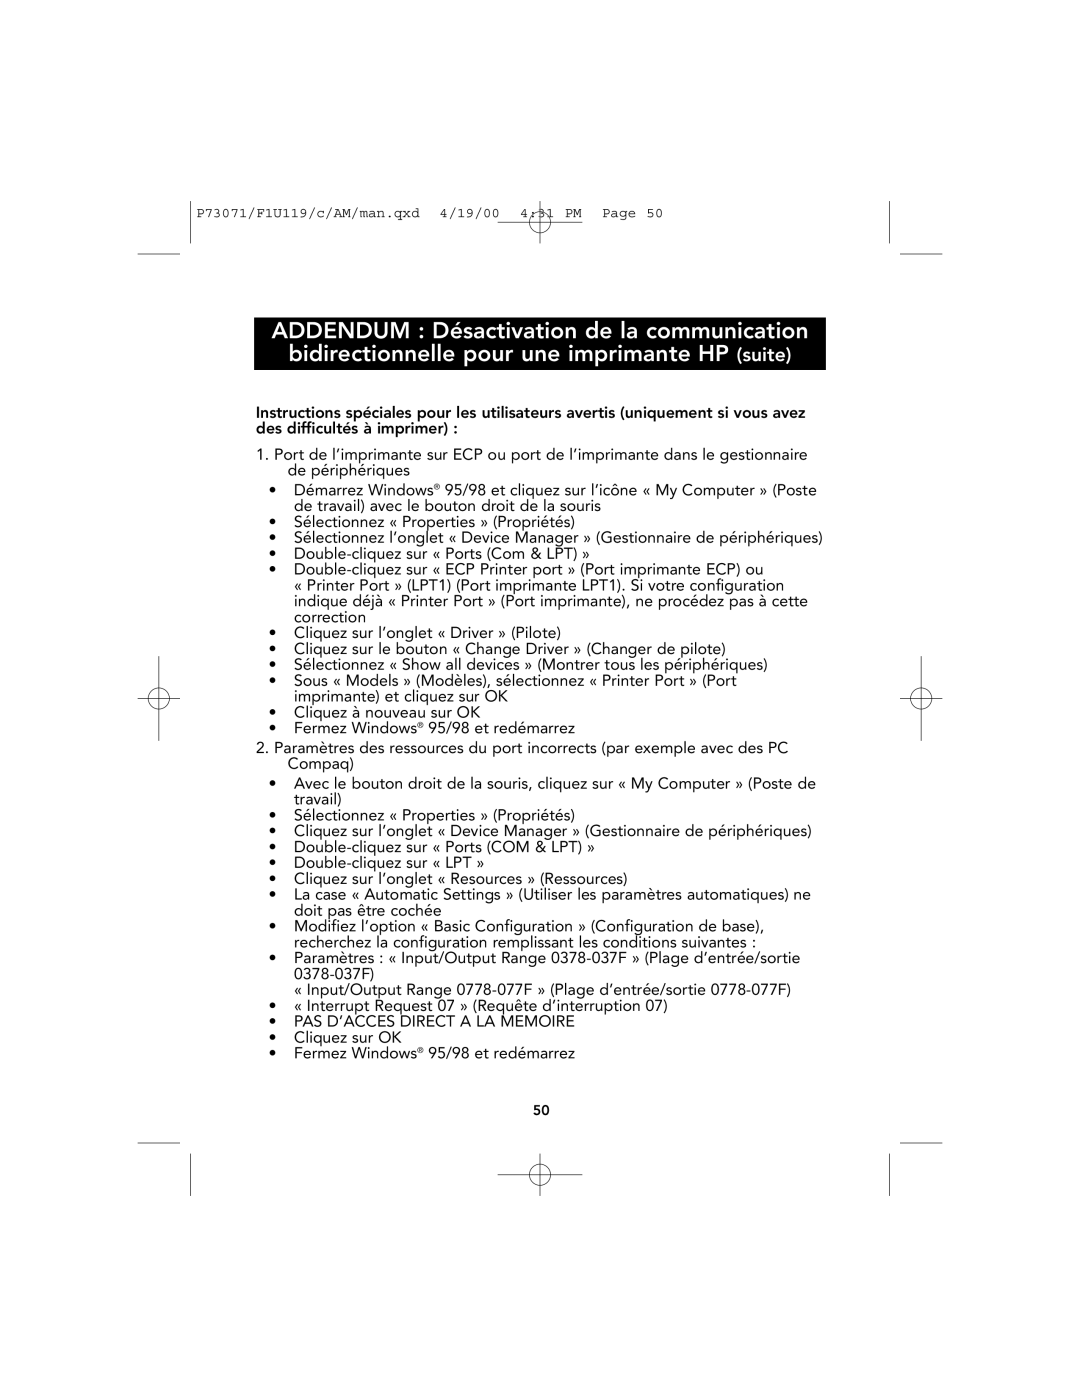 Belkin F1U119 user manual Sélectionnez « Properties » Propriétés 